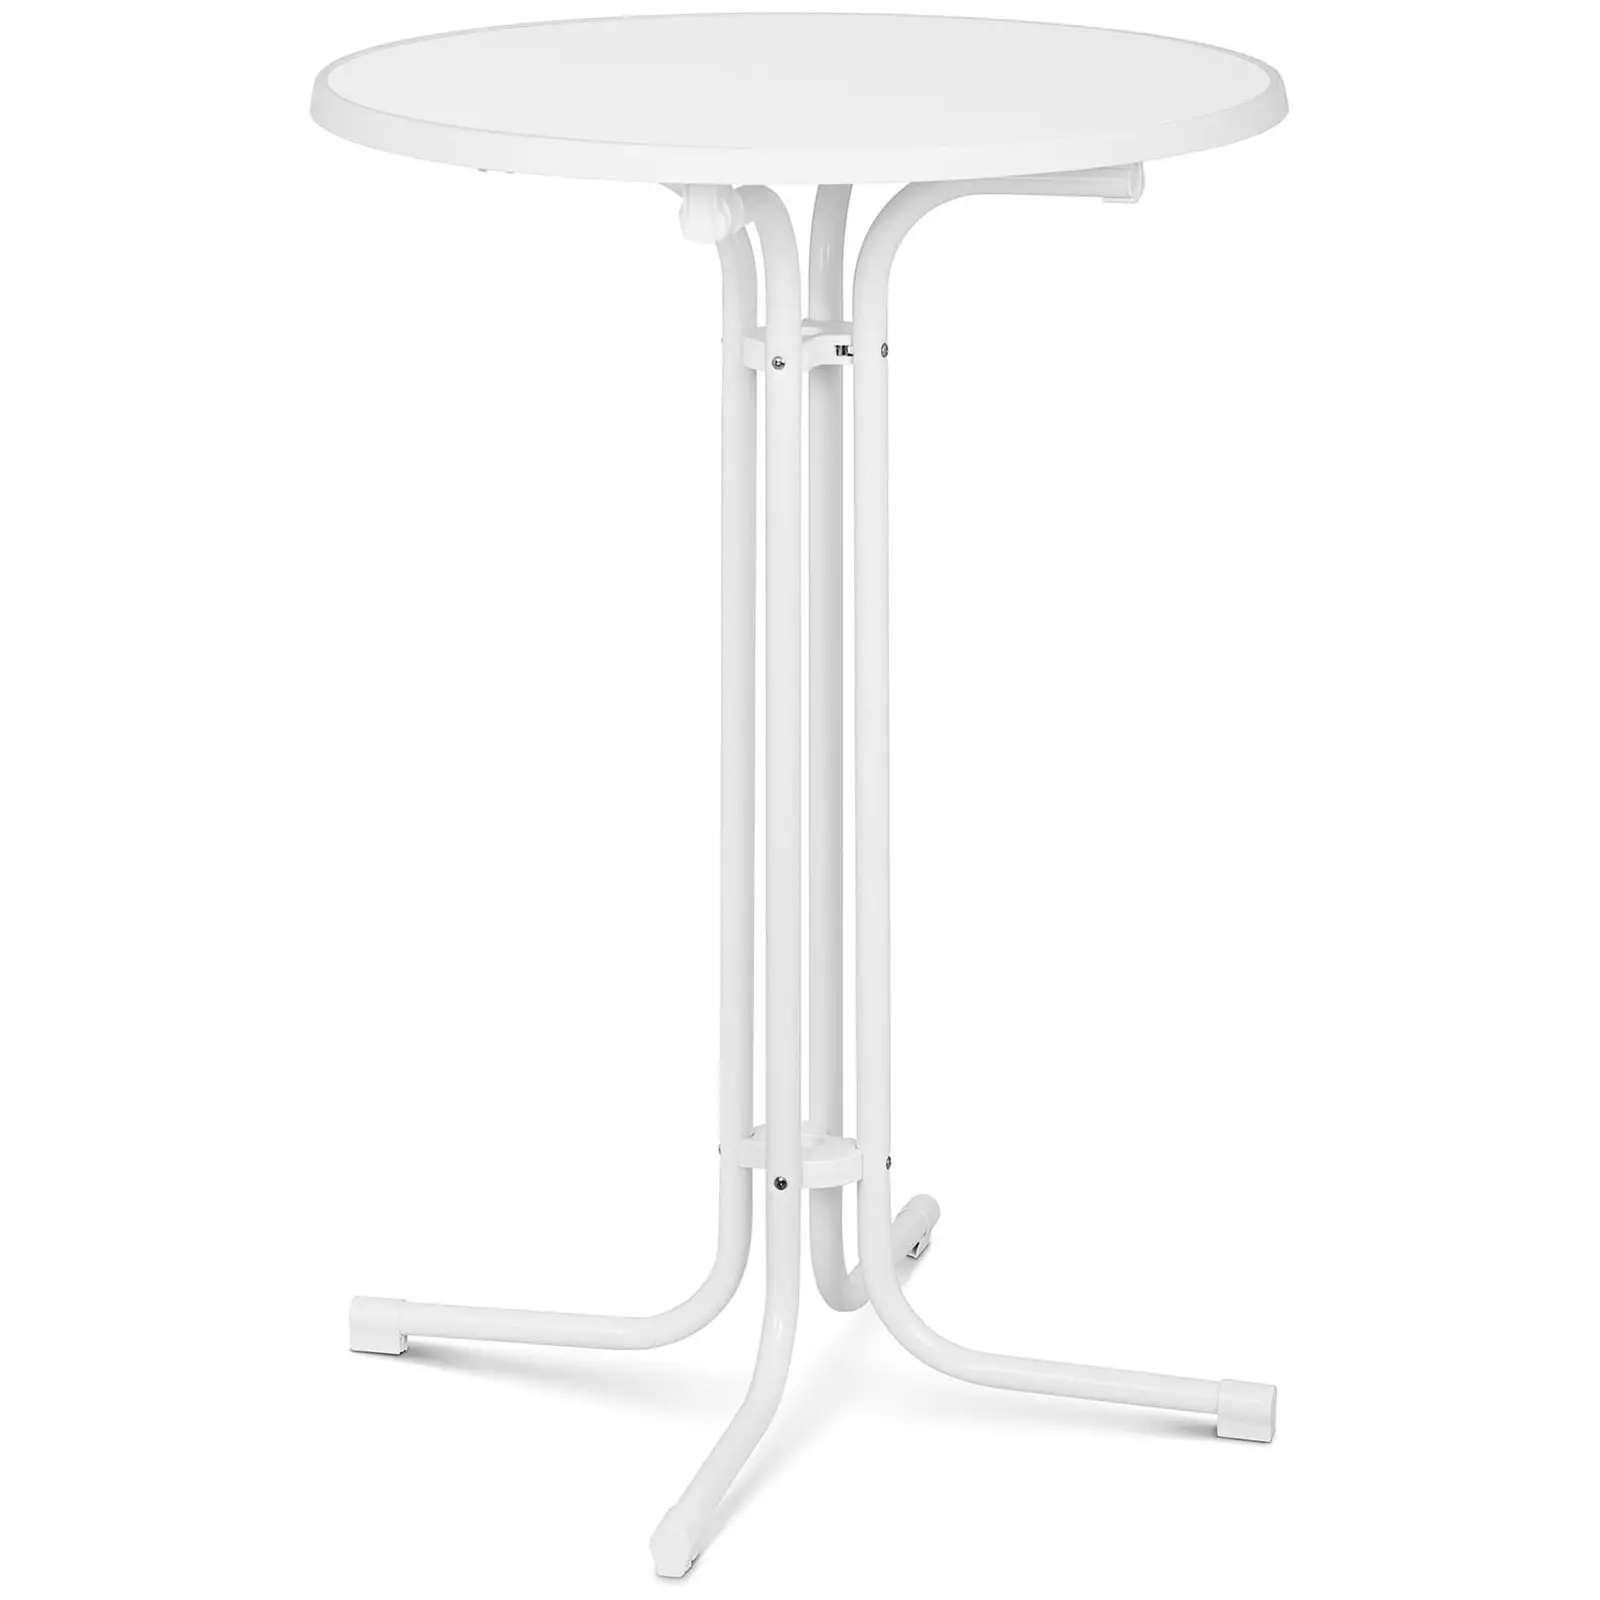 Koktejlový stůl - Ø 80 cm - skládací - bílý